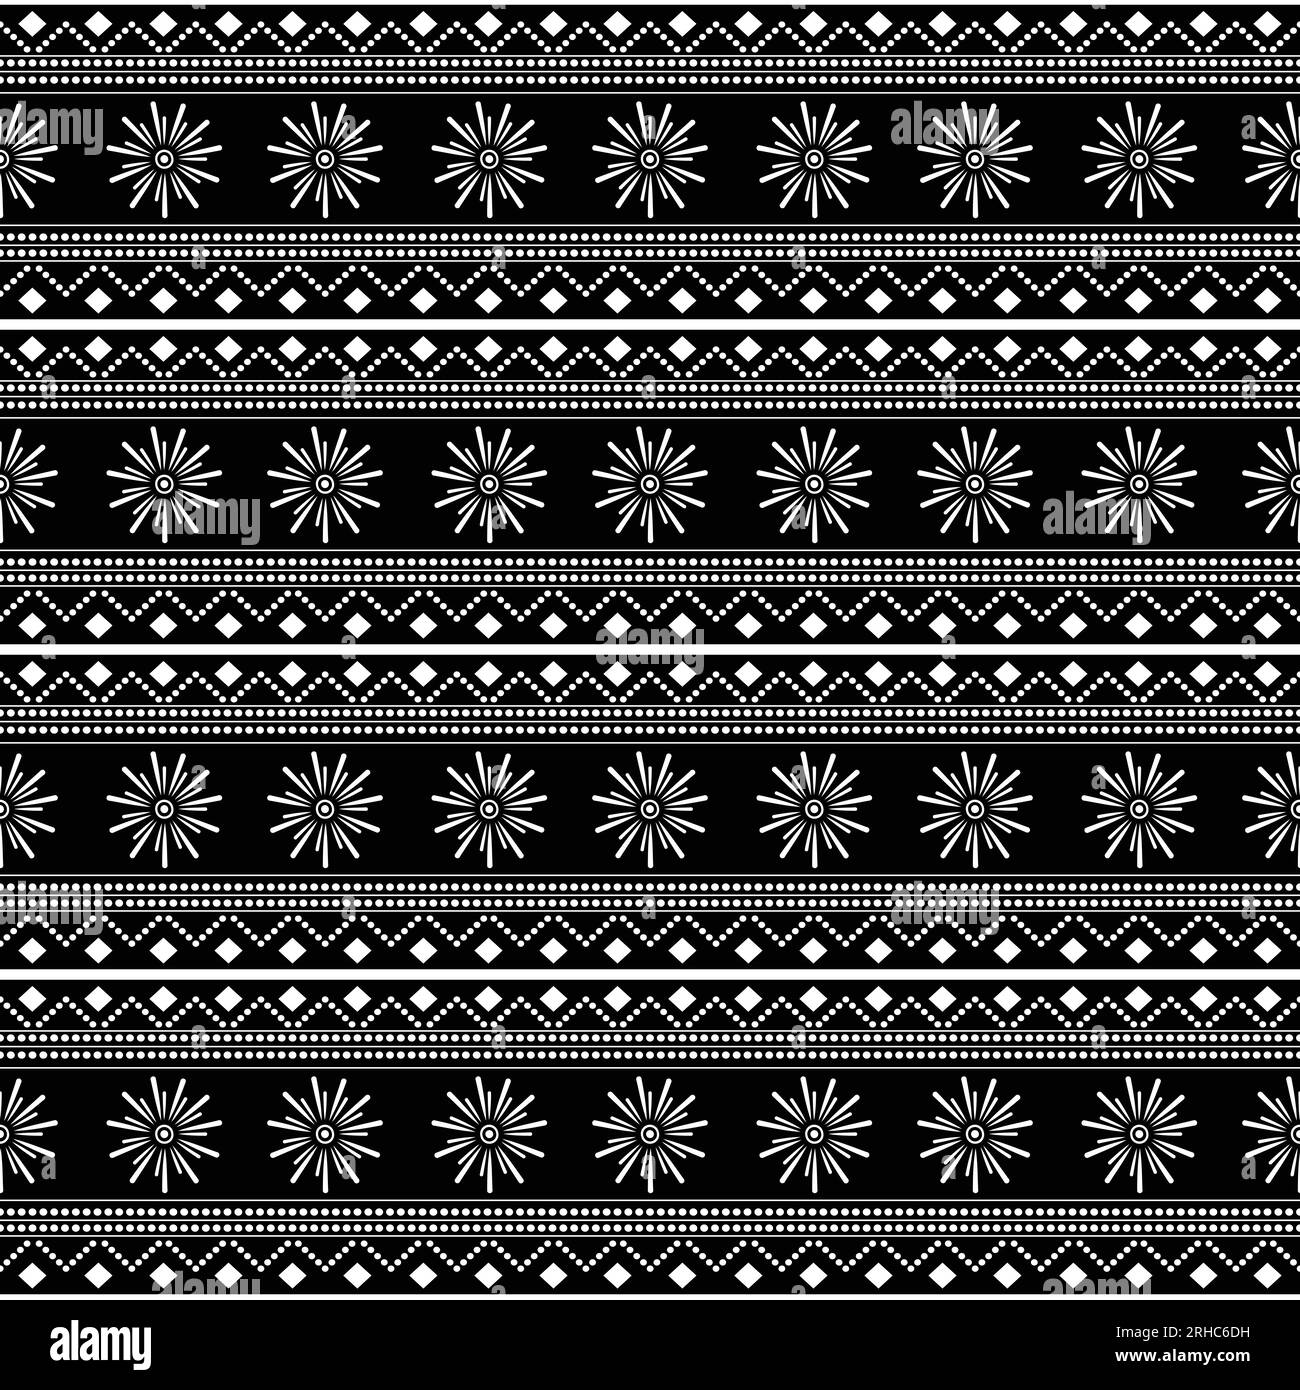 Black and white tribal seamless pattern vector illustration with stripes drawing mandala stars batik motif. Stock Vector